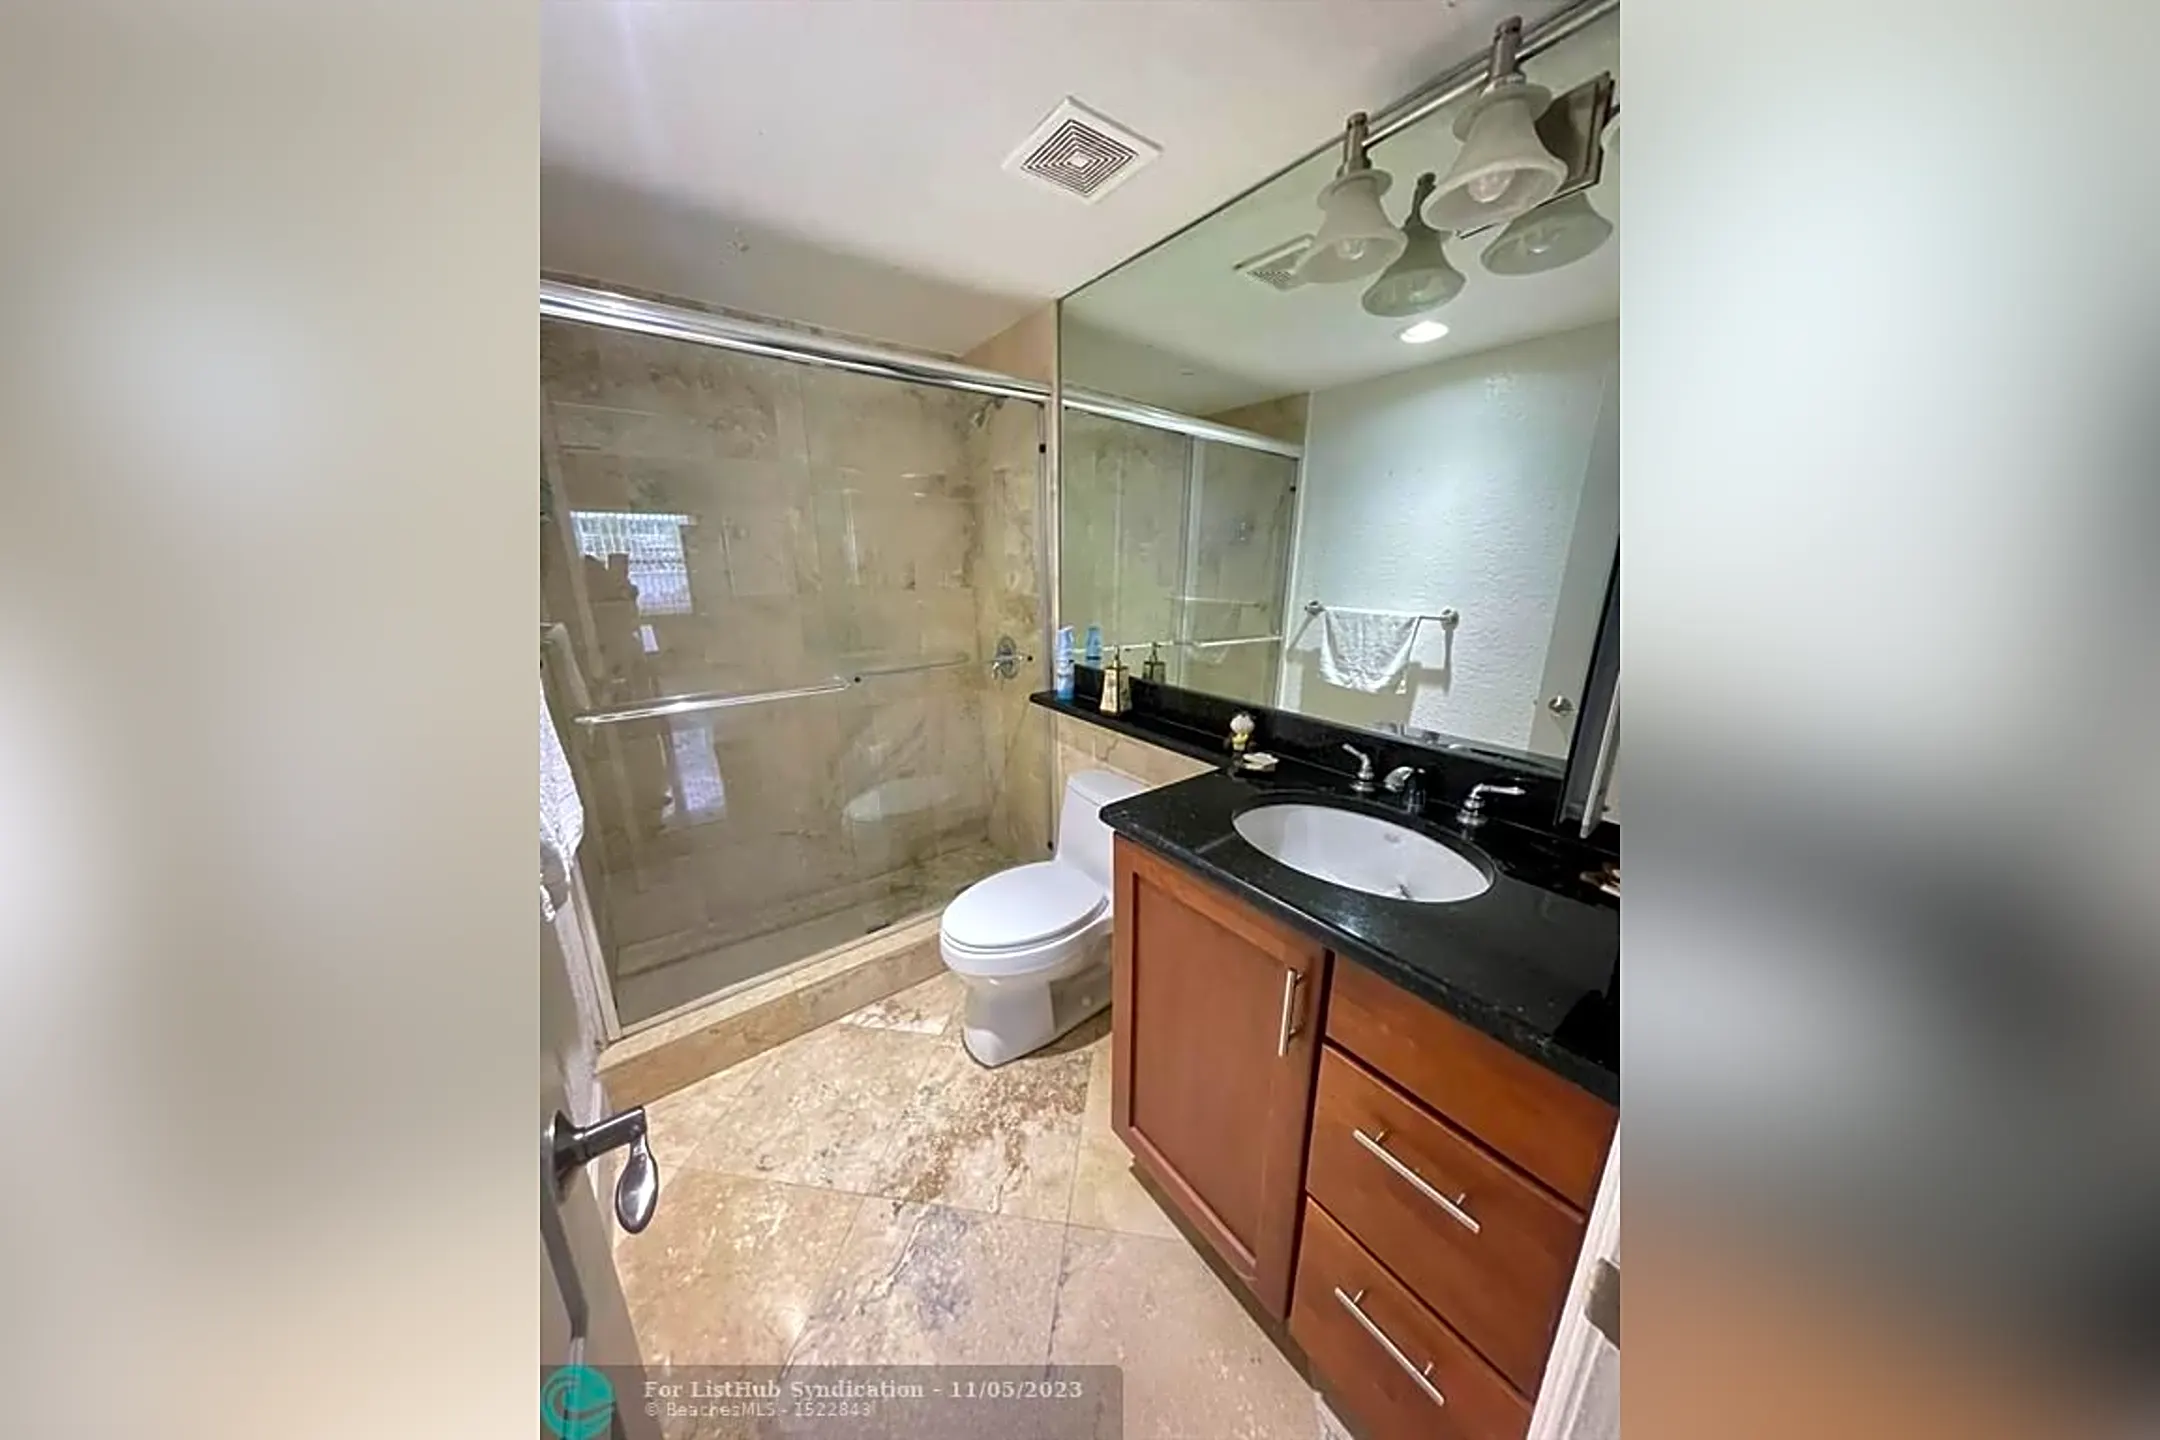 Bathroom - 2900 NE 30th St #M1 - Fort Lauderdale, FL